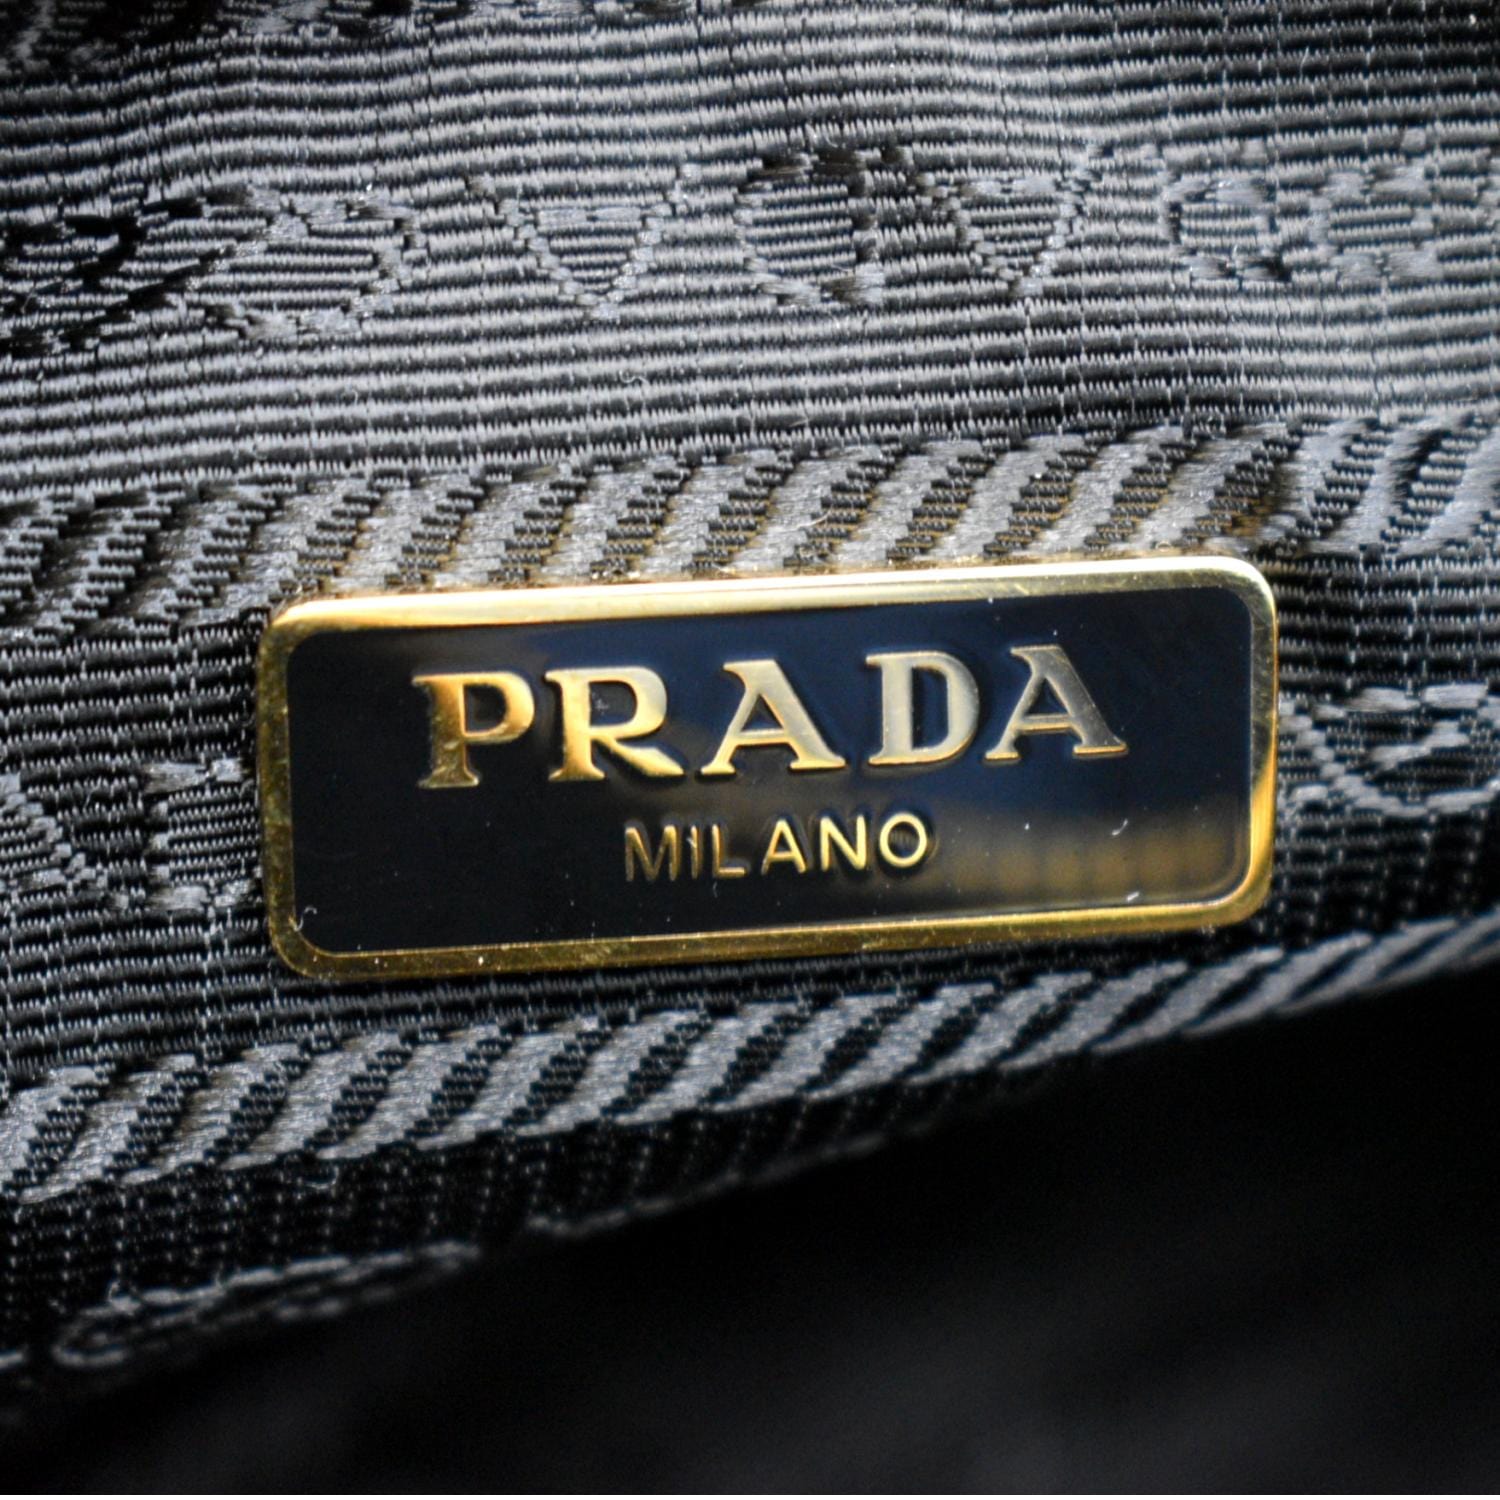 Sold at Auction: Prada Saffiano Leather Shoulder Bag Color Black/Nero